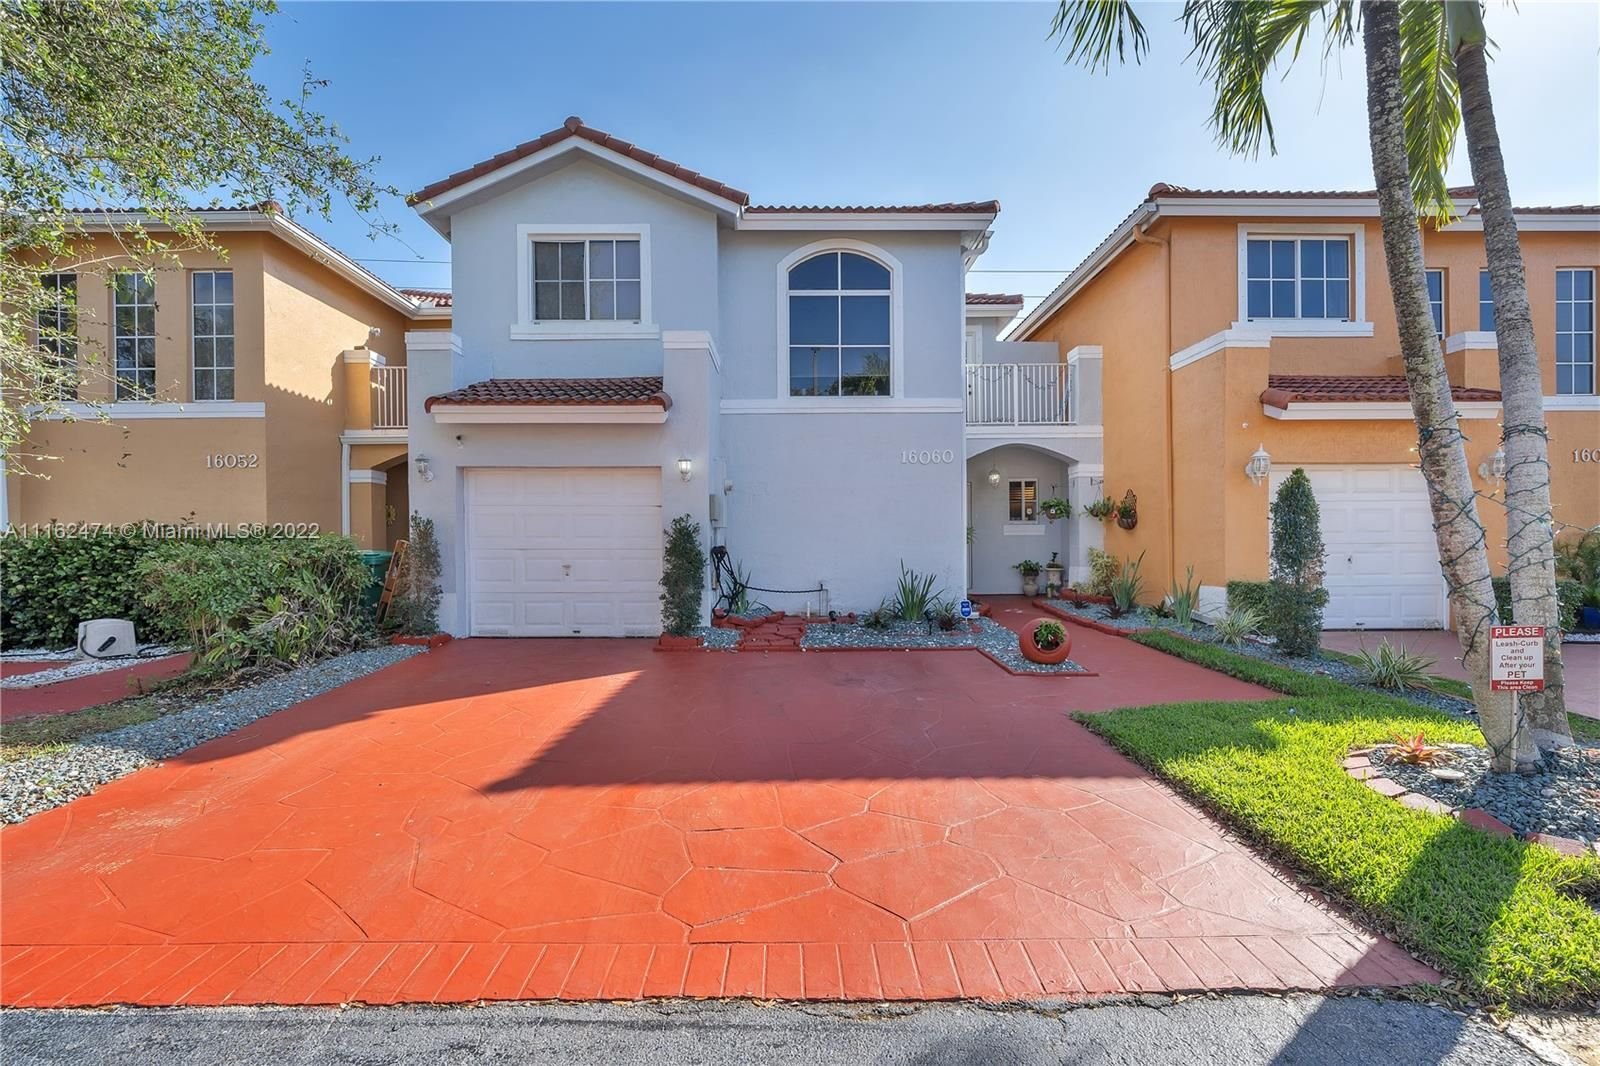 Real estate property located at 16060 87th Ter, Miami-Dade County, Miami, FL